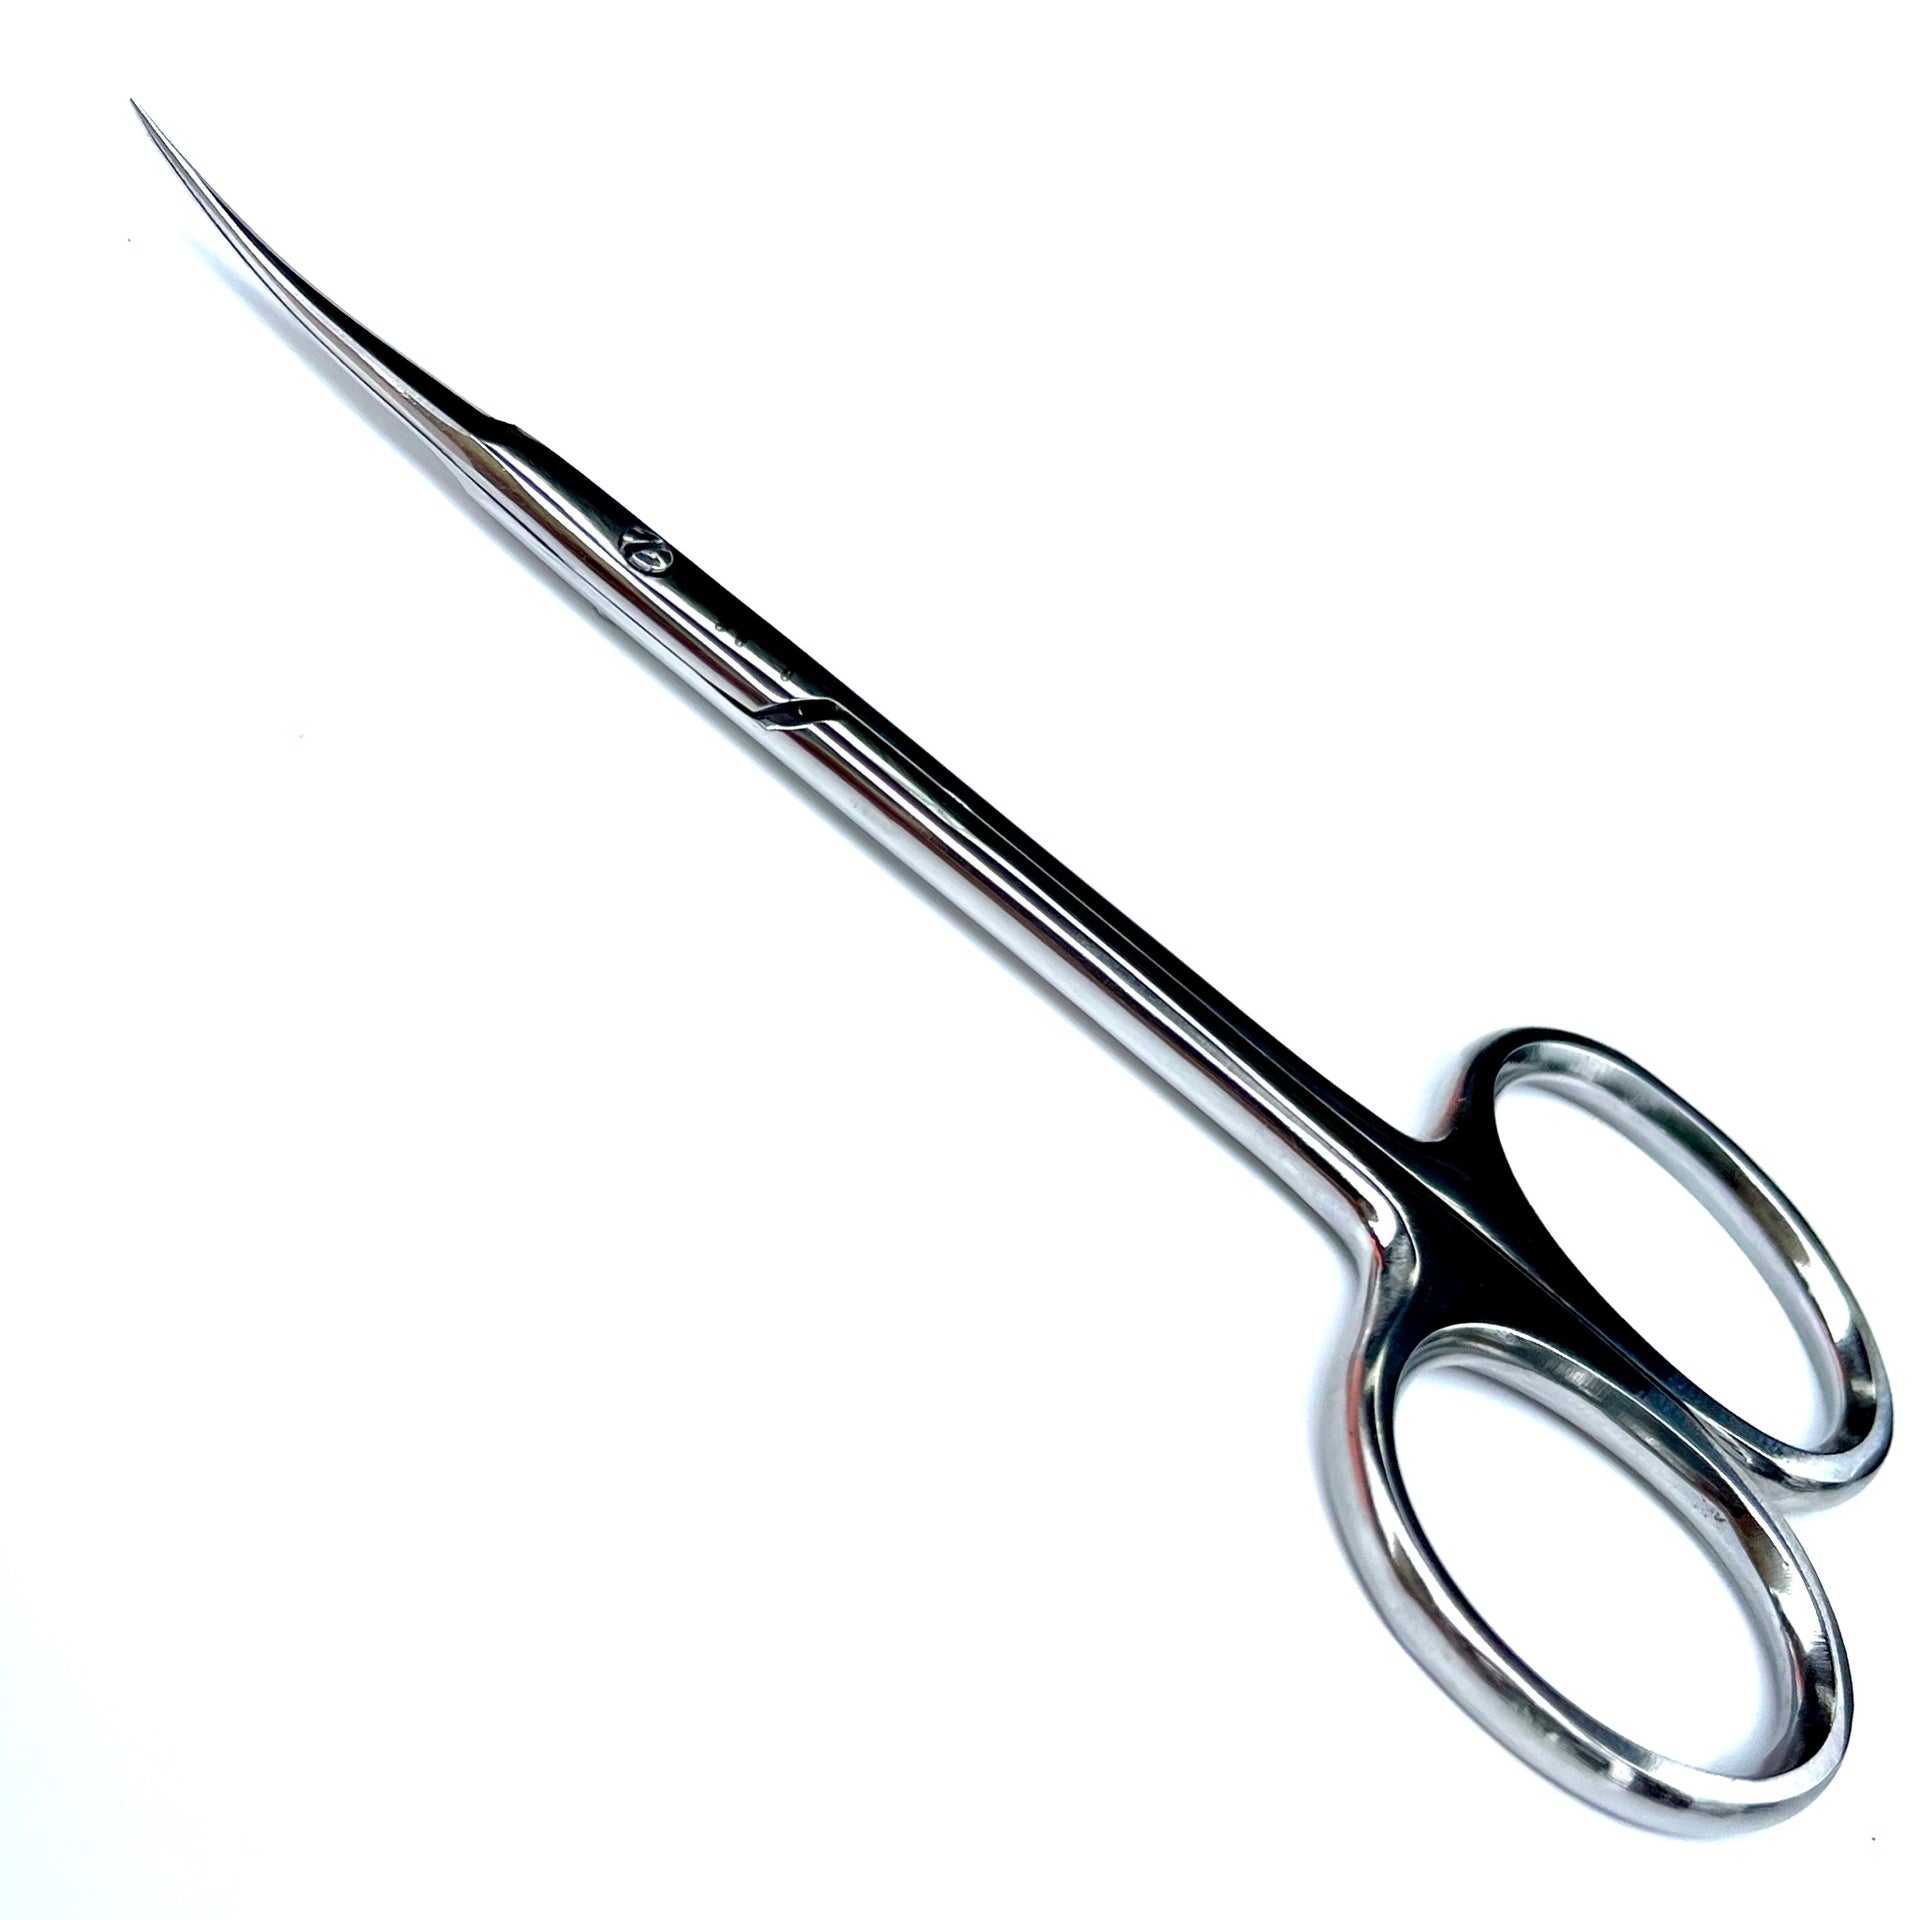 Russian Manicure Scissors Cuticle Regrowth Cut Curved Tip Nail